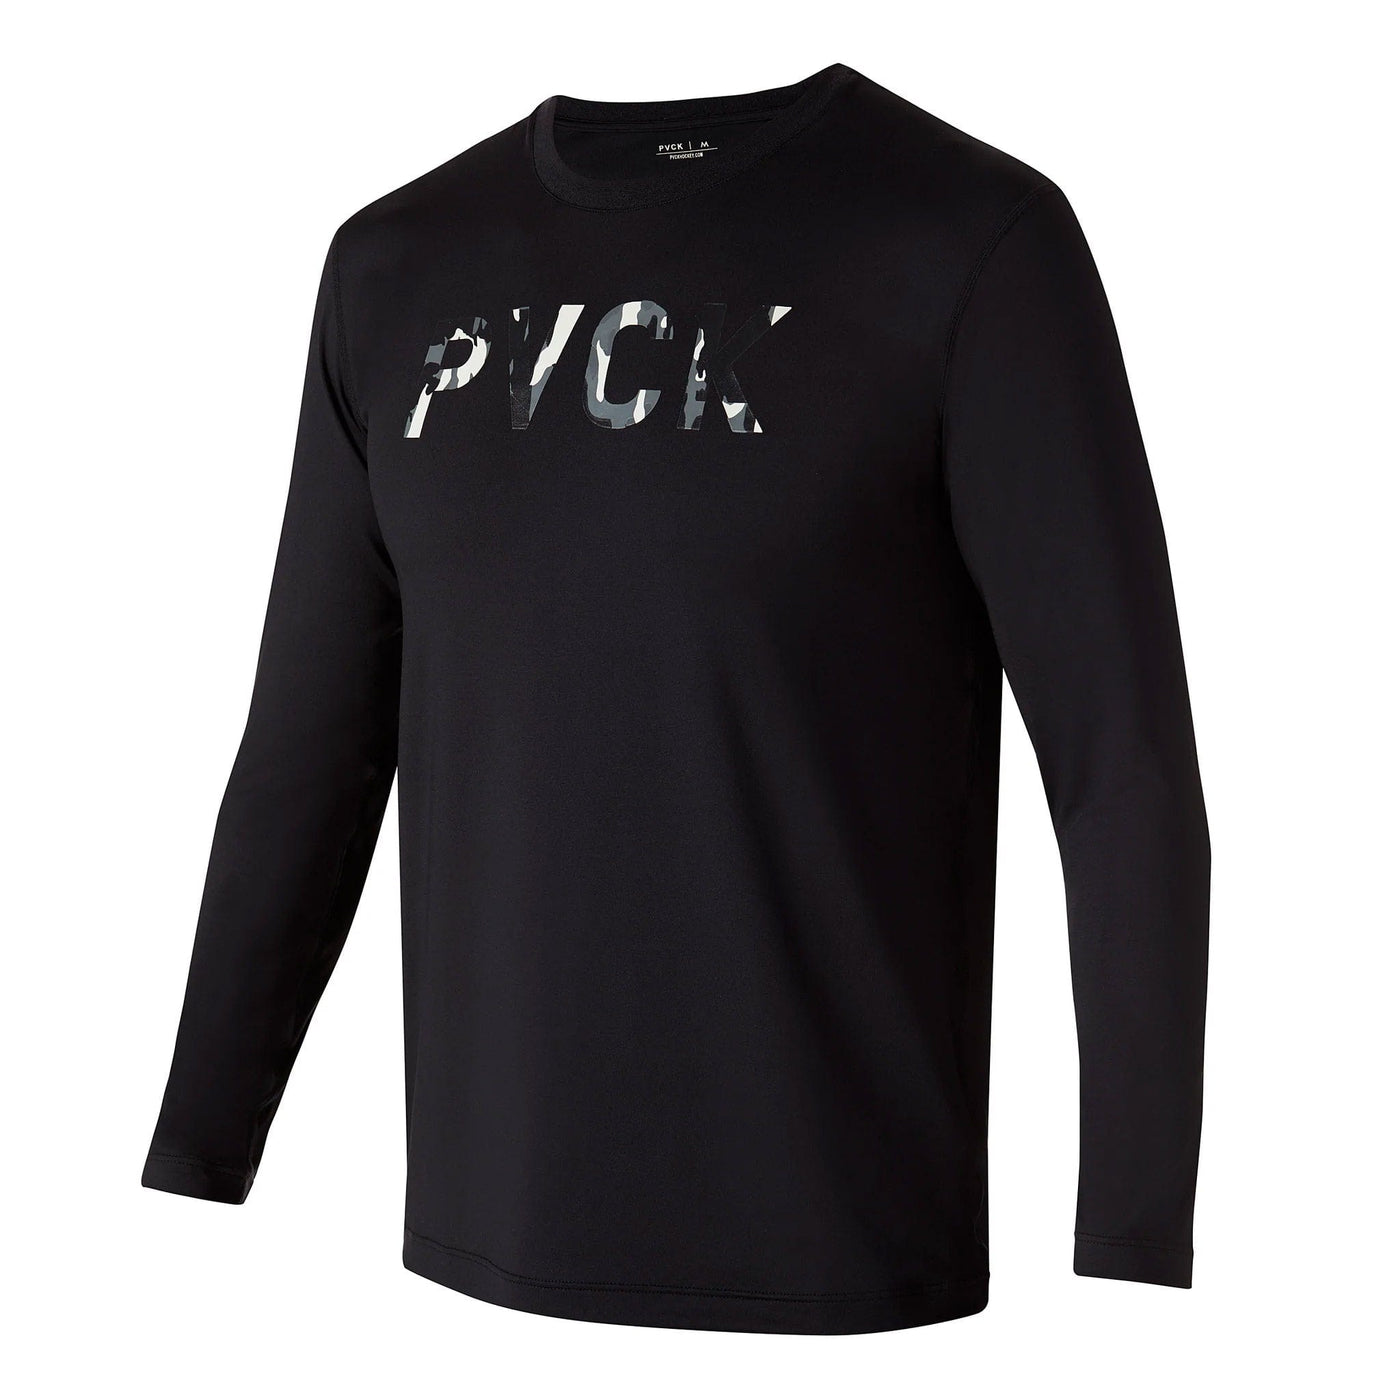 PVCK Technical Senior Baselayer Shirt - Camo - The Hockey Shop Source For Sports